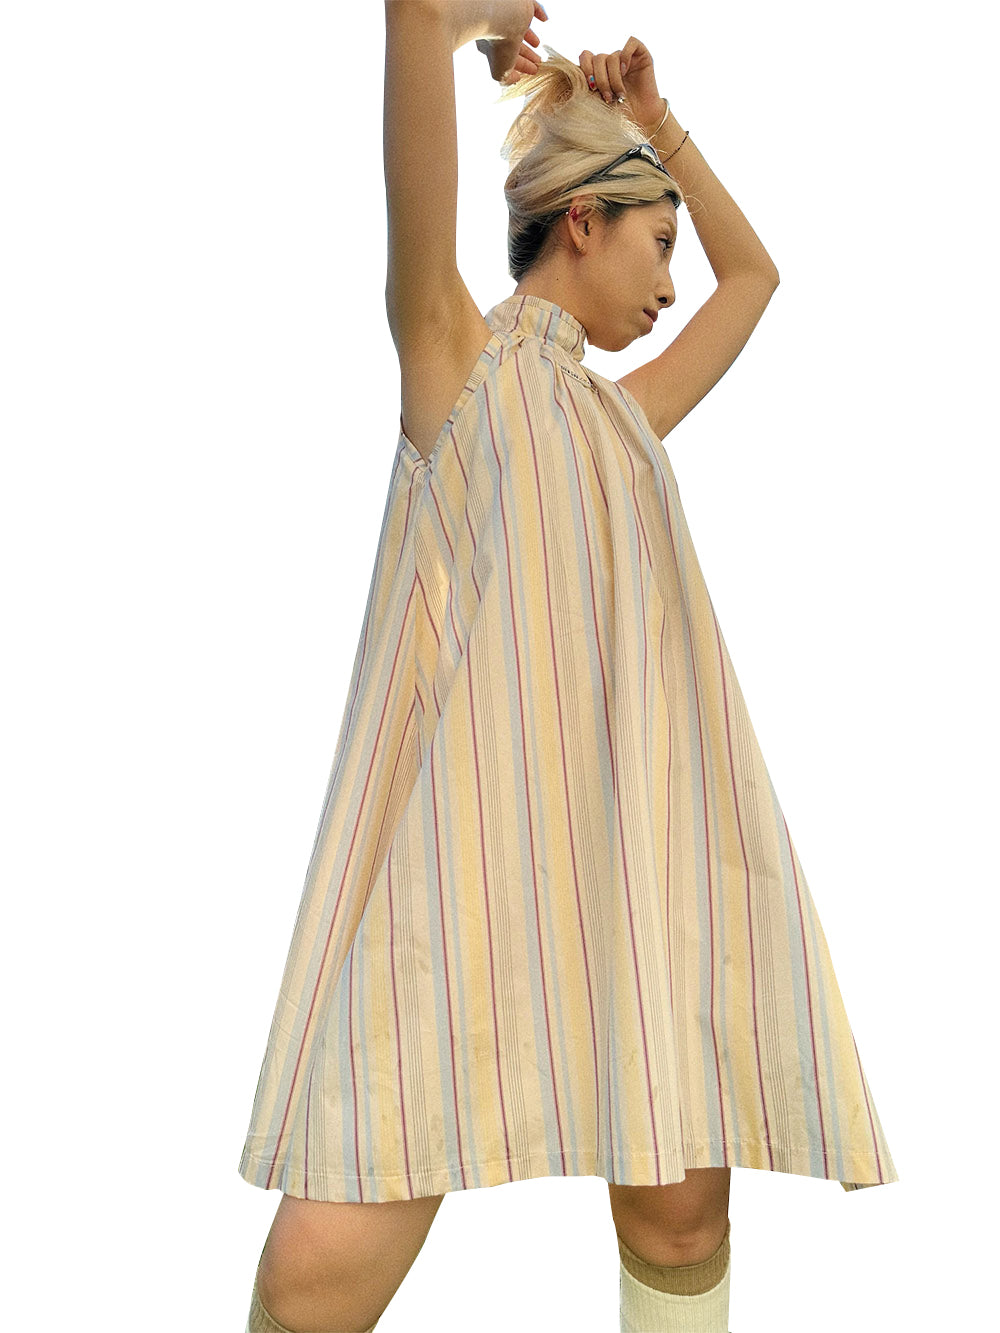 MUKZIN x TPG Yellow and White Striped Halter Neck Dress